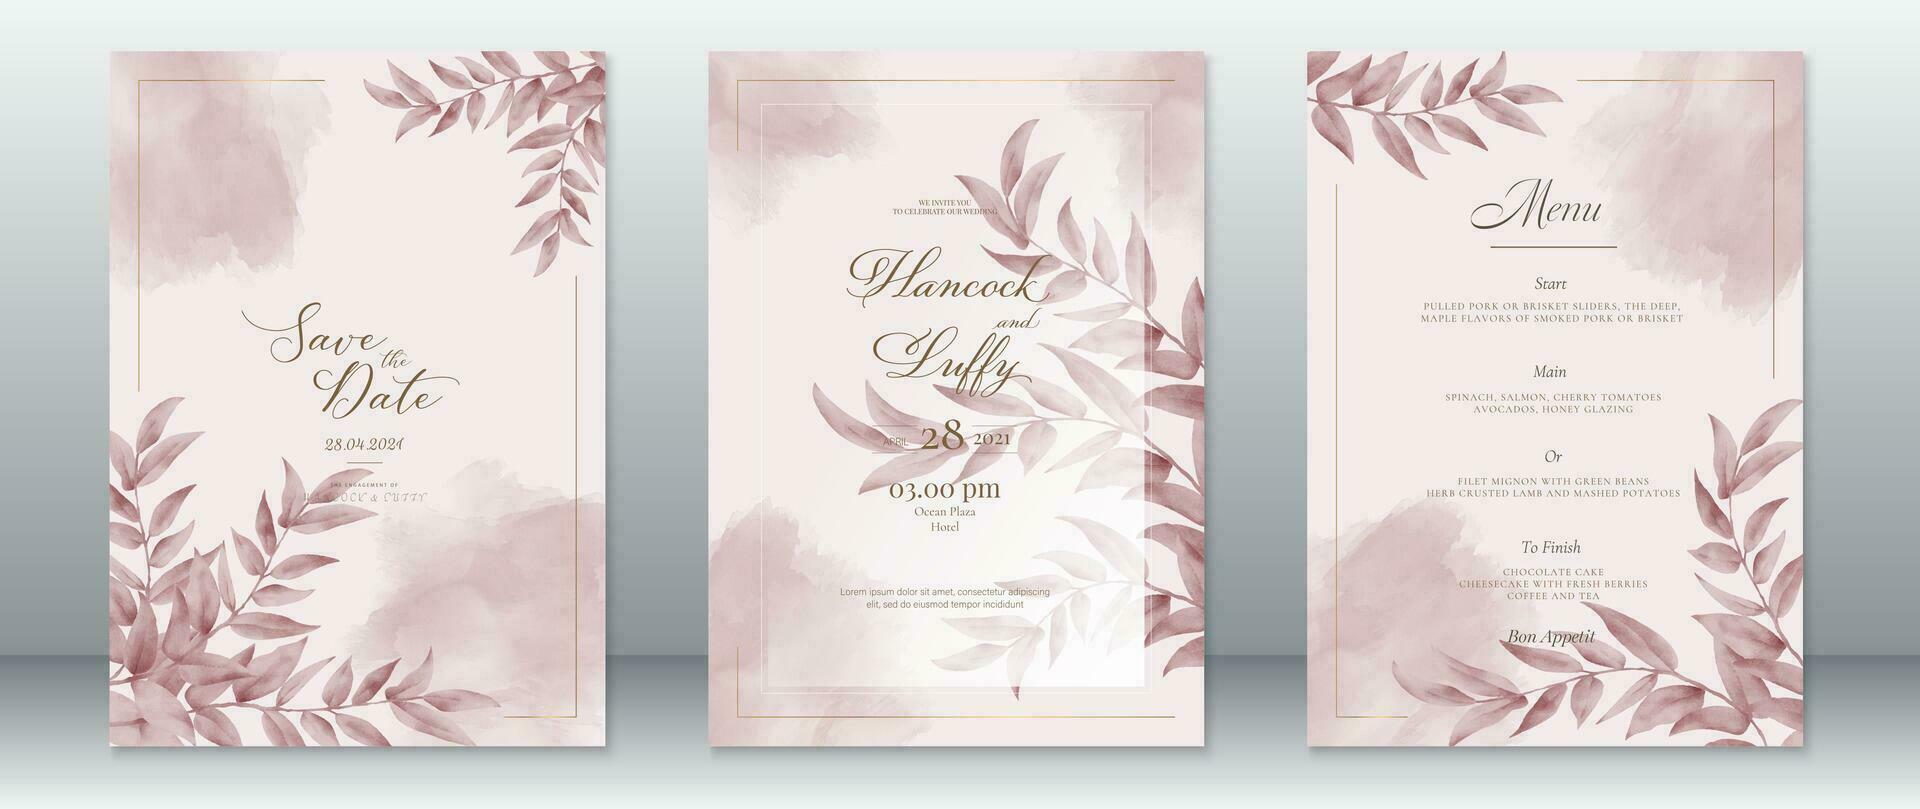 Wedding invitation card template nature design vector